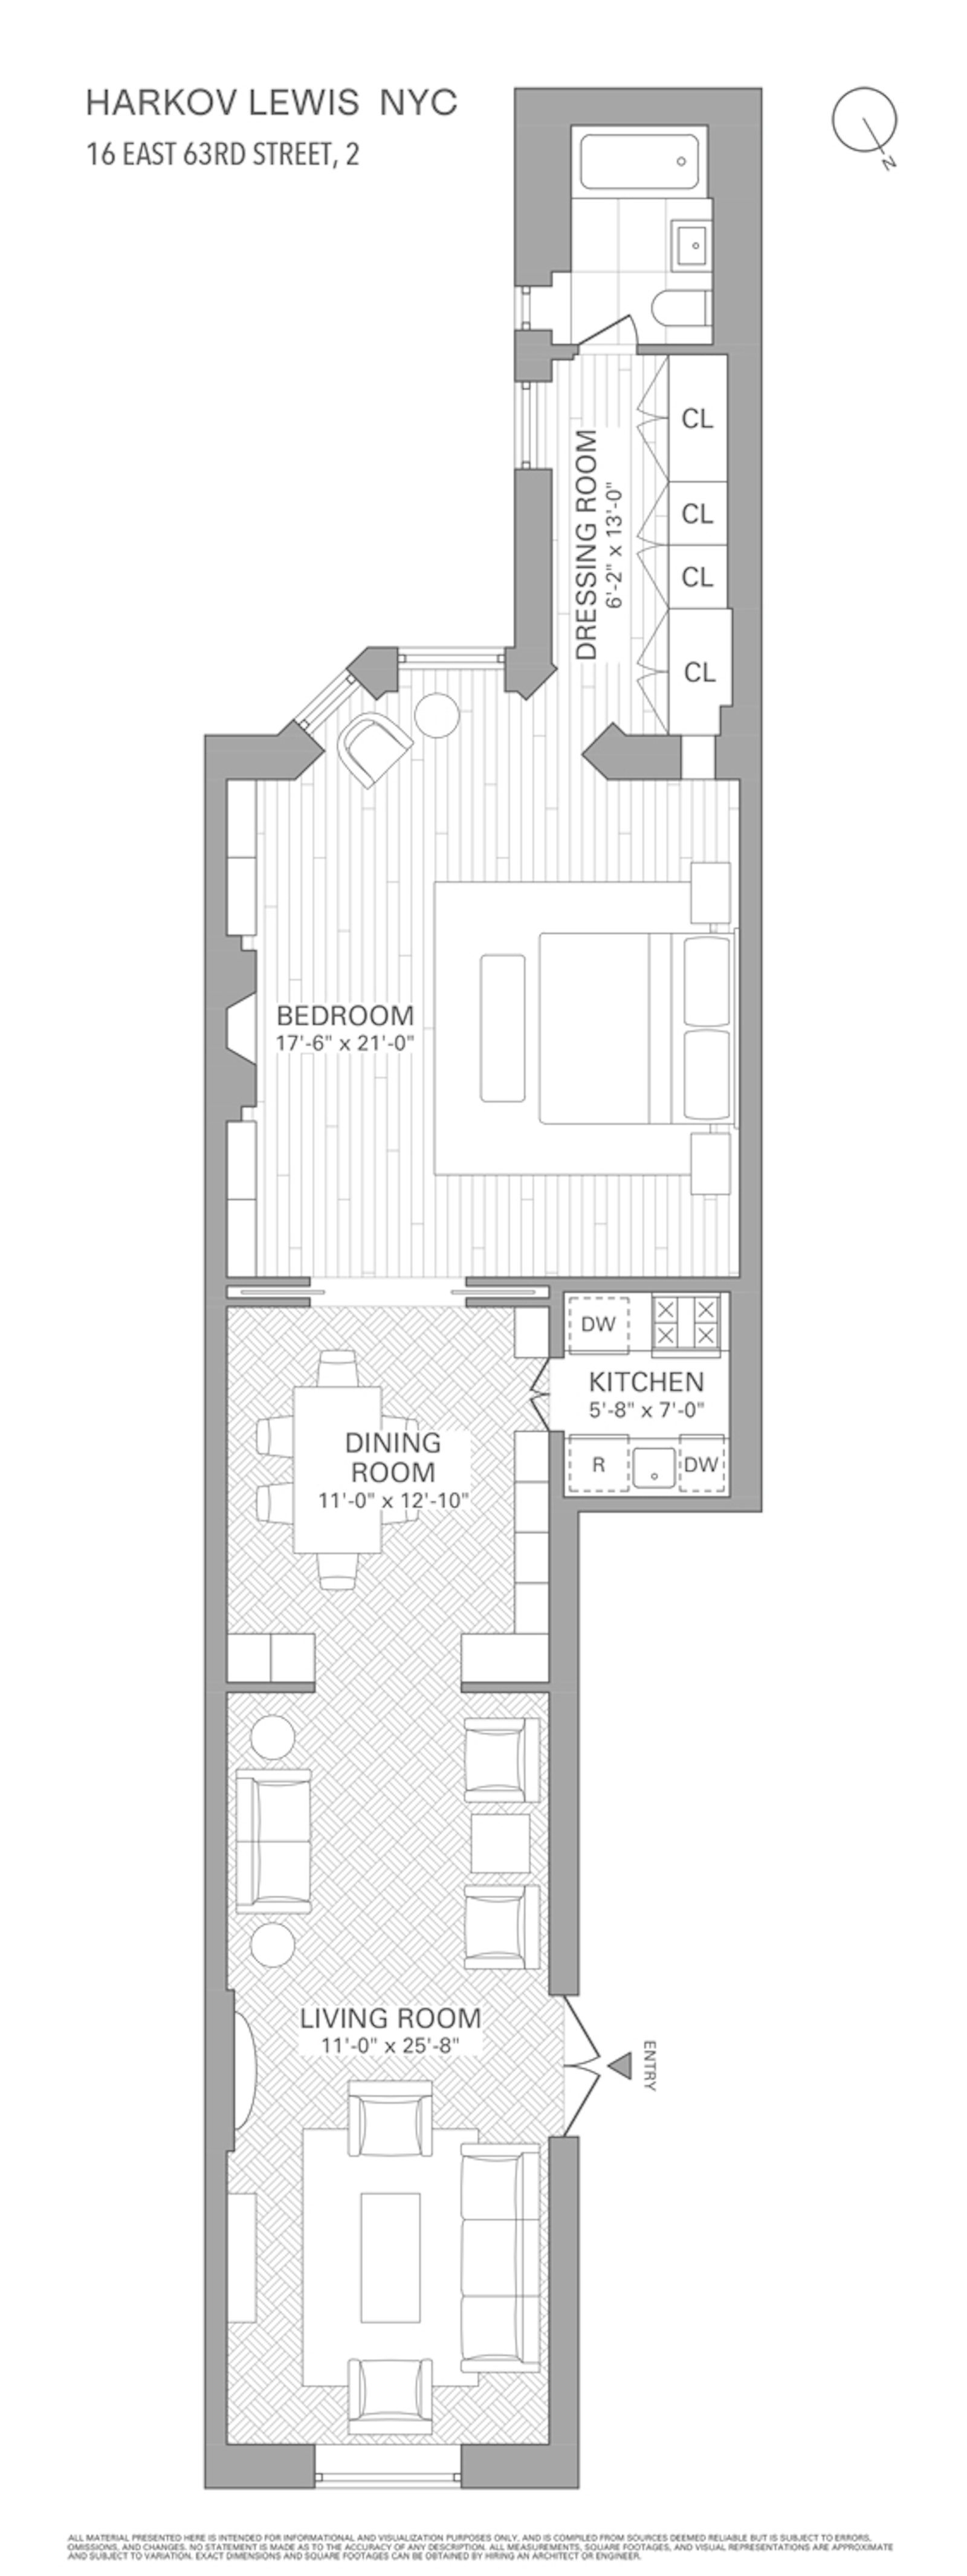 Floorplan for 16 East 63rd Street, 2